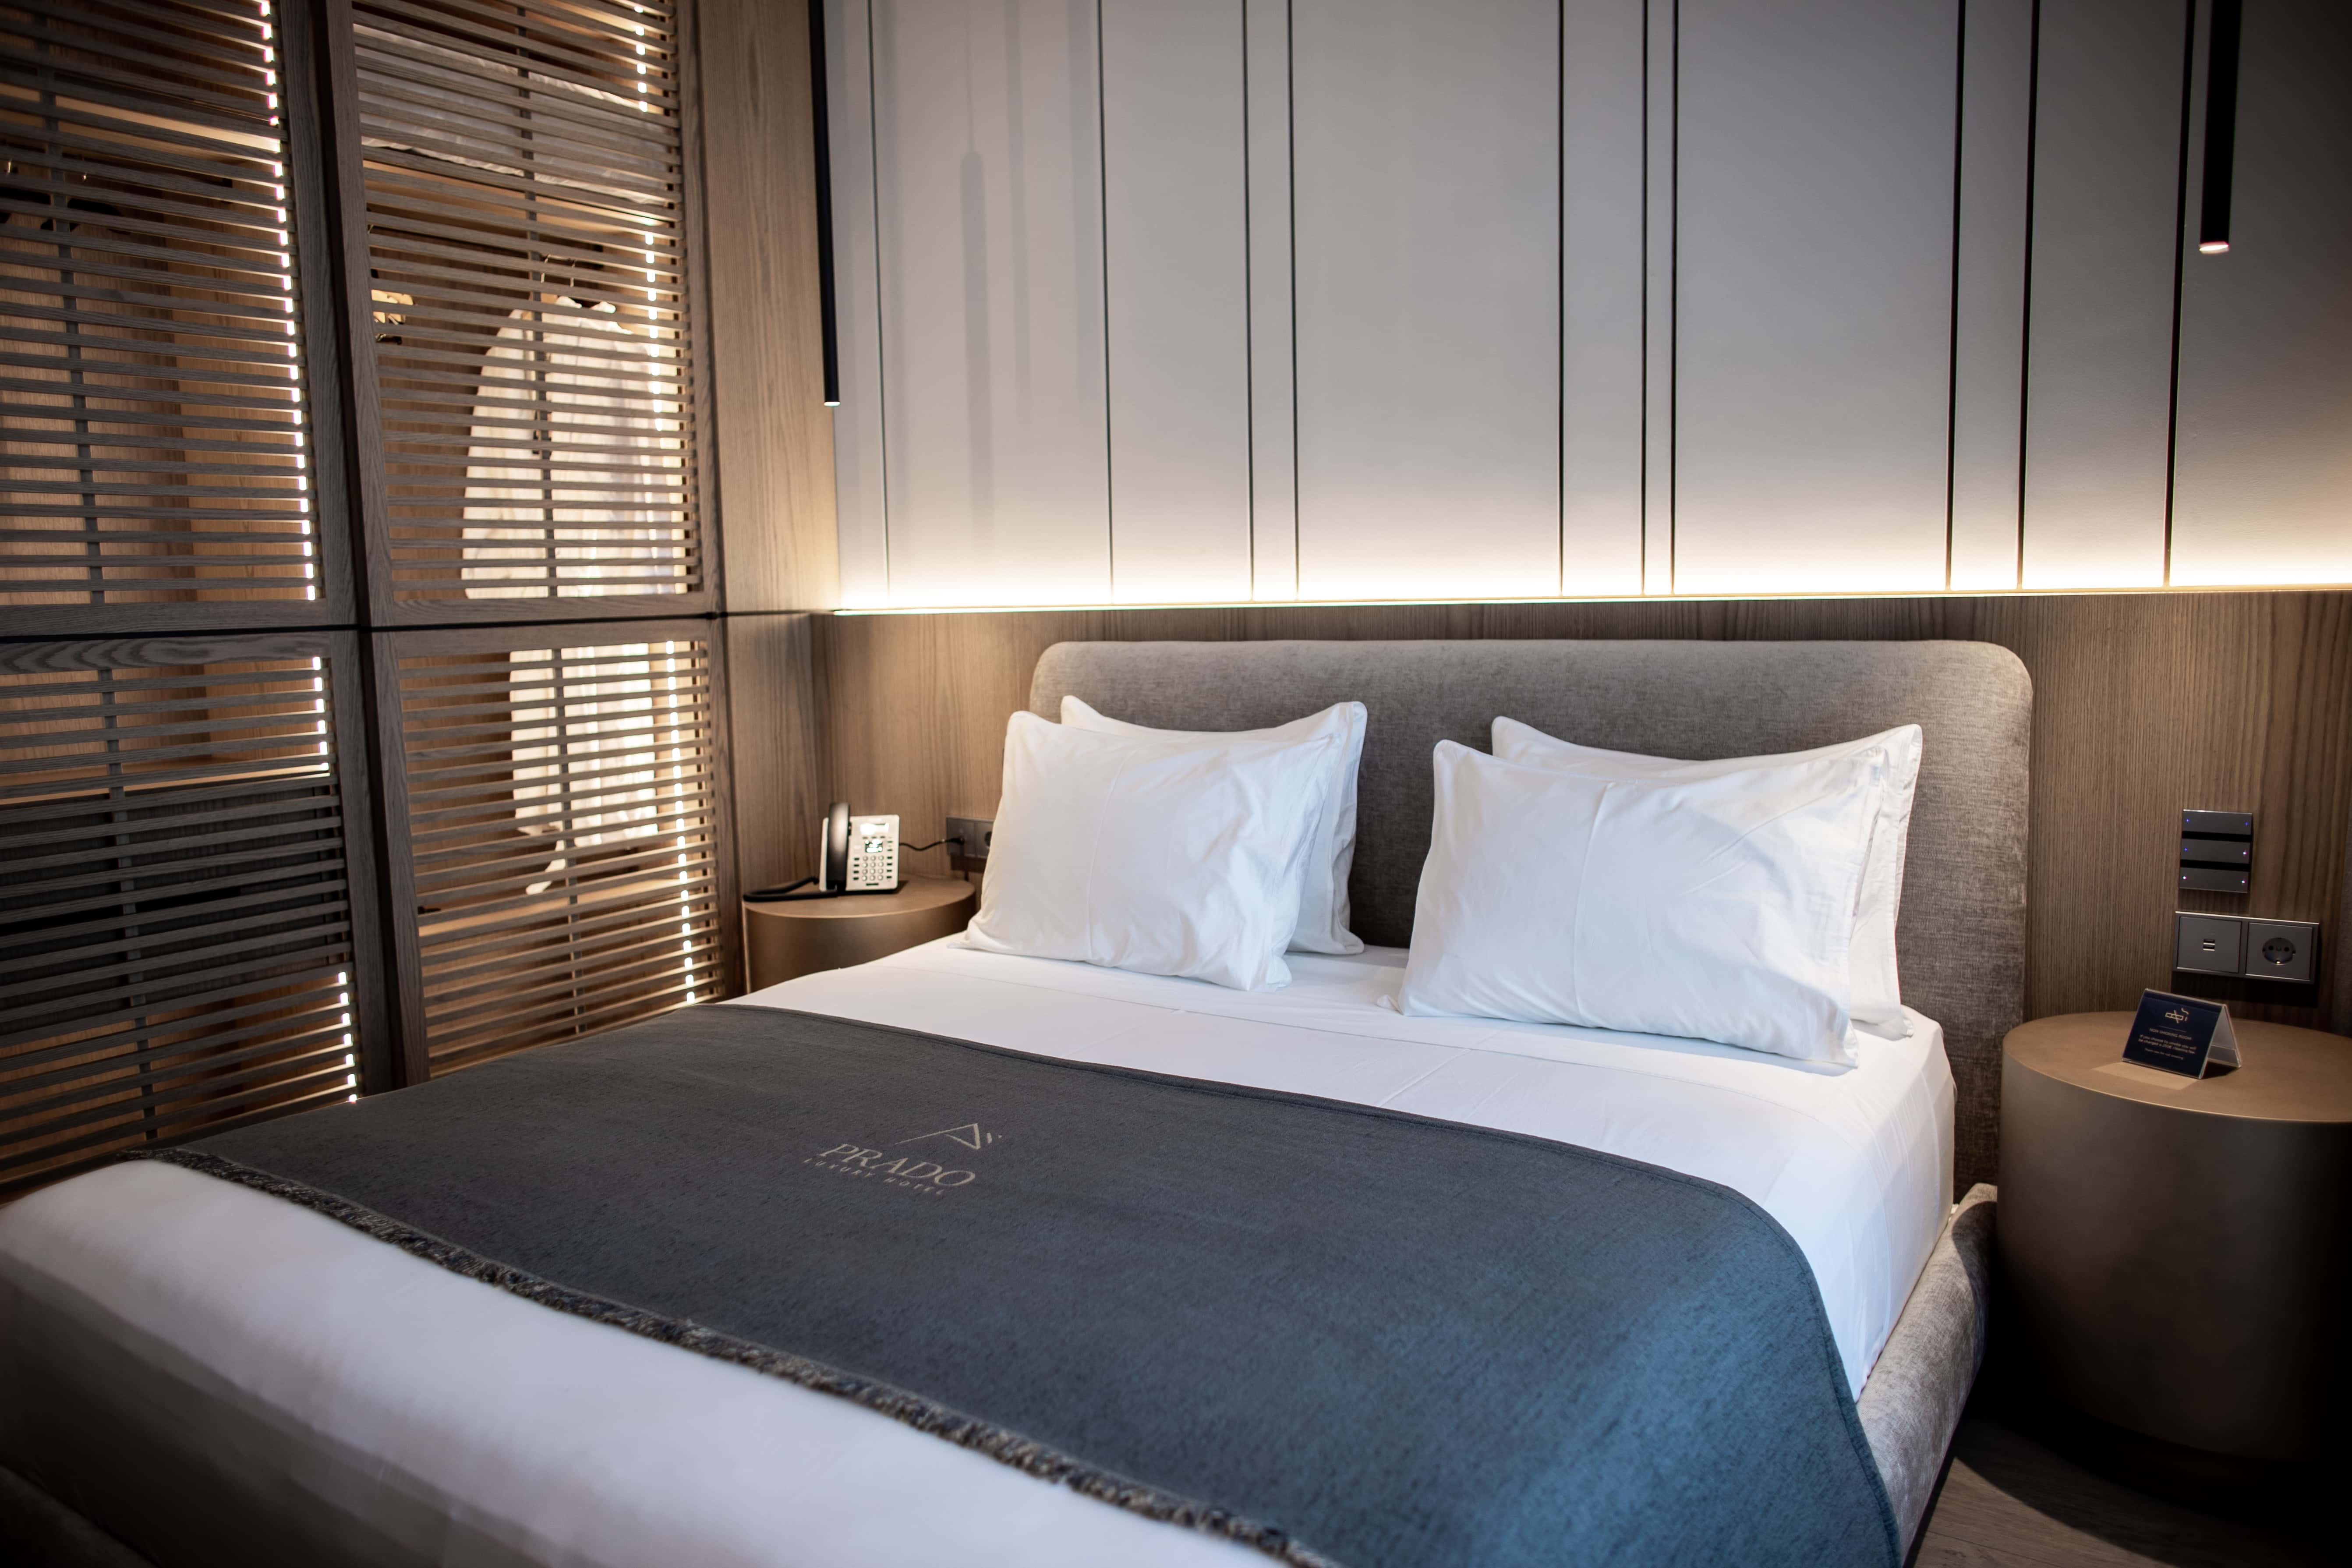 prado_luxury_hotel_room_standard_seaview_jacuzzi_bed_closet_inner_view